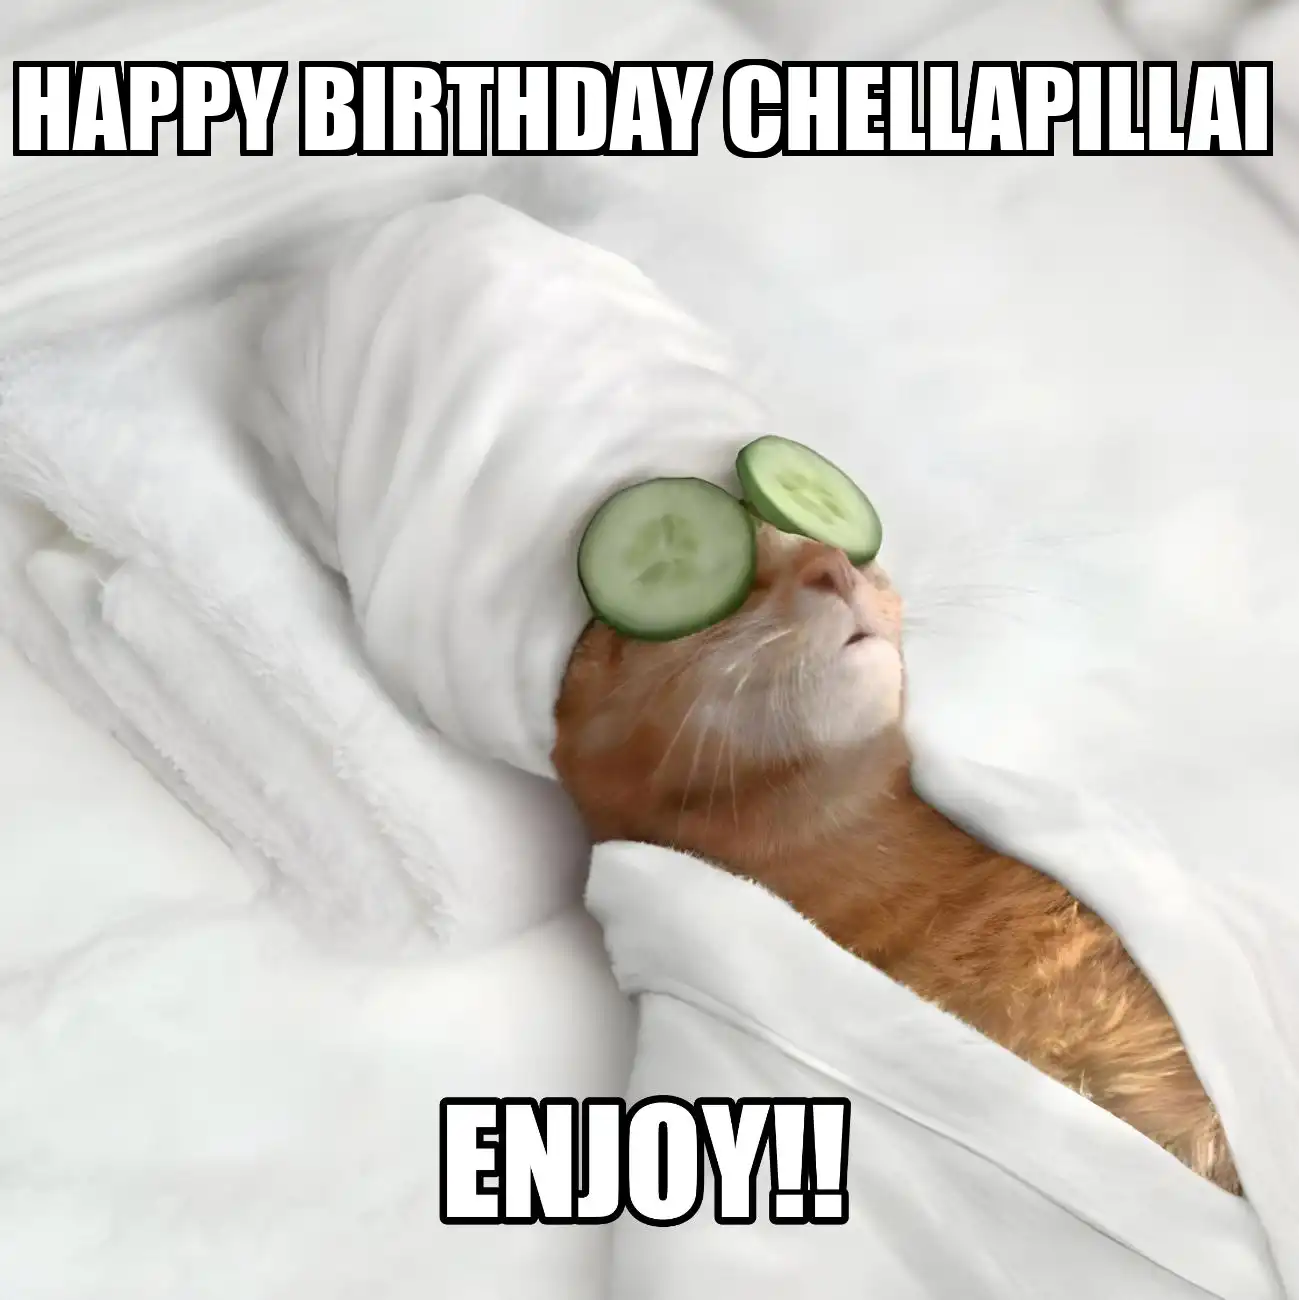 Happy Birthday Chellapillai Enjoy Cat Meme